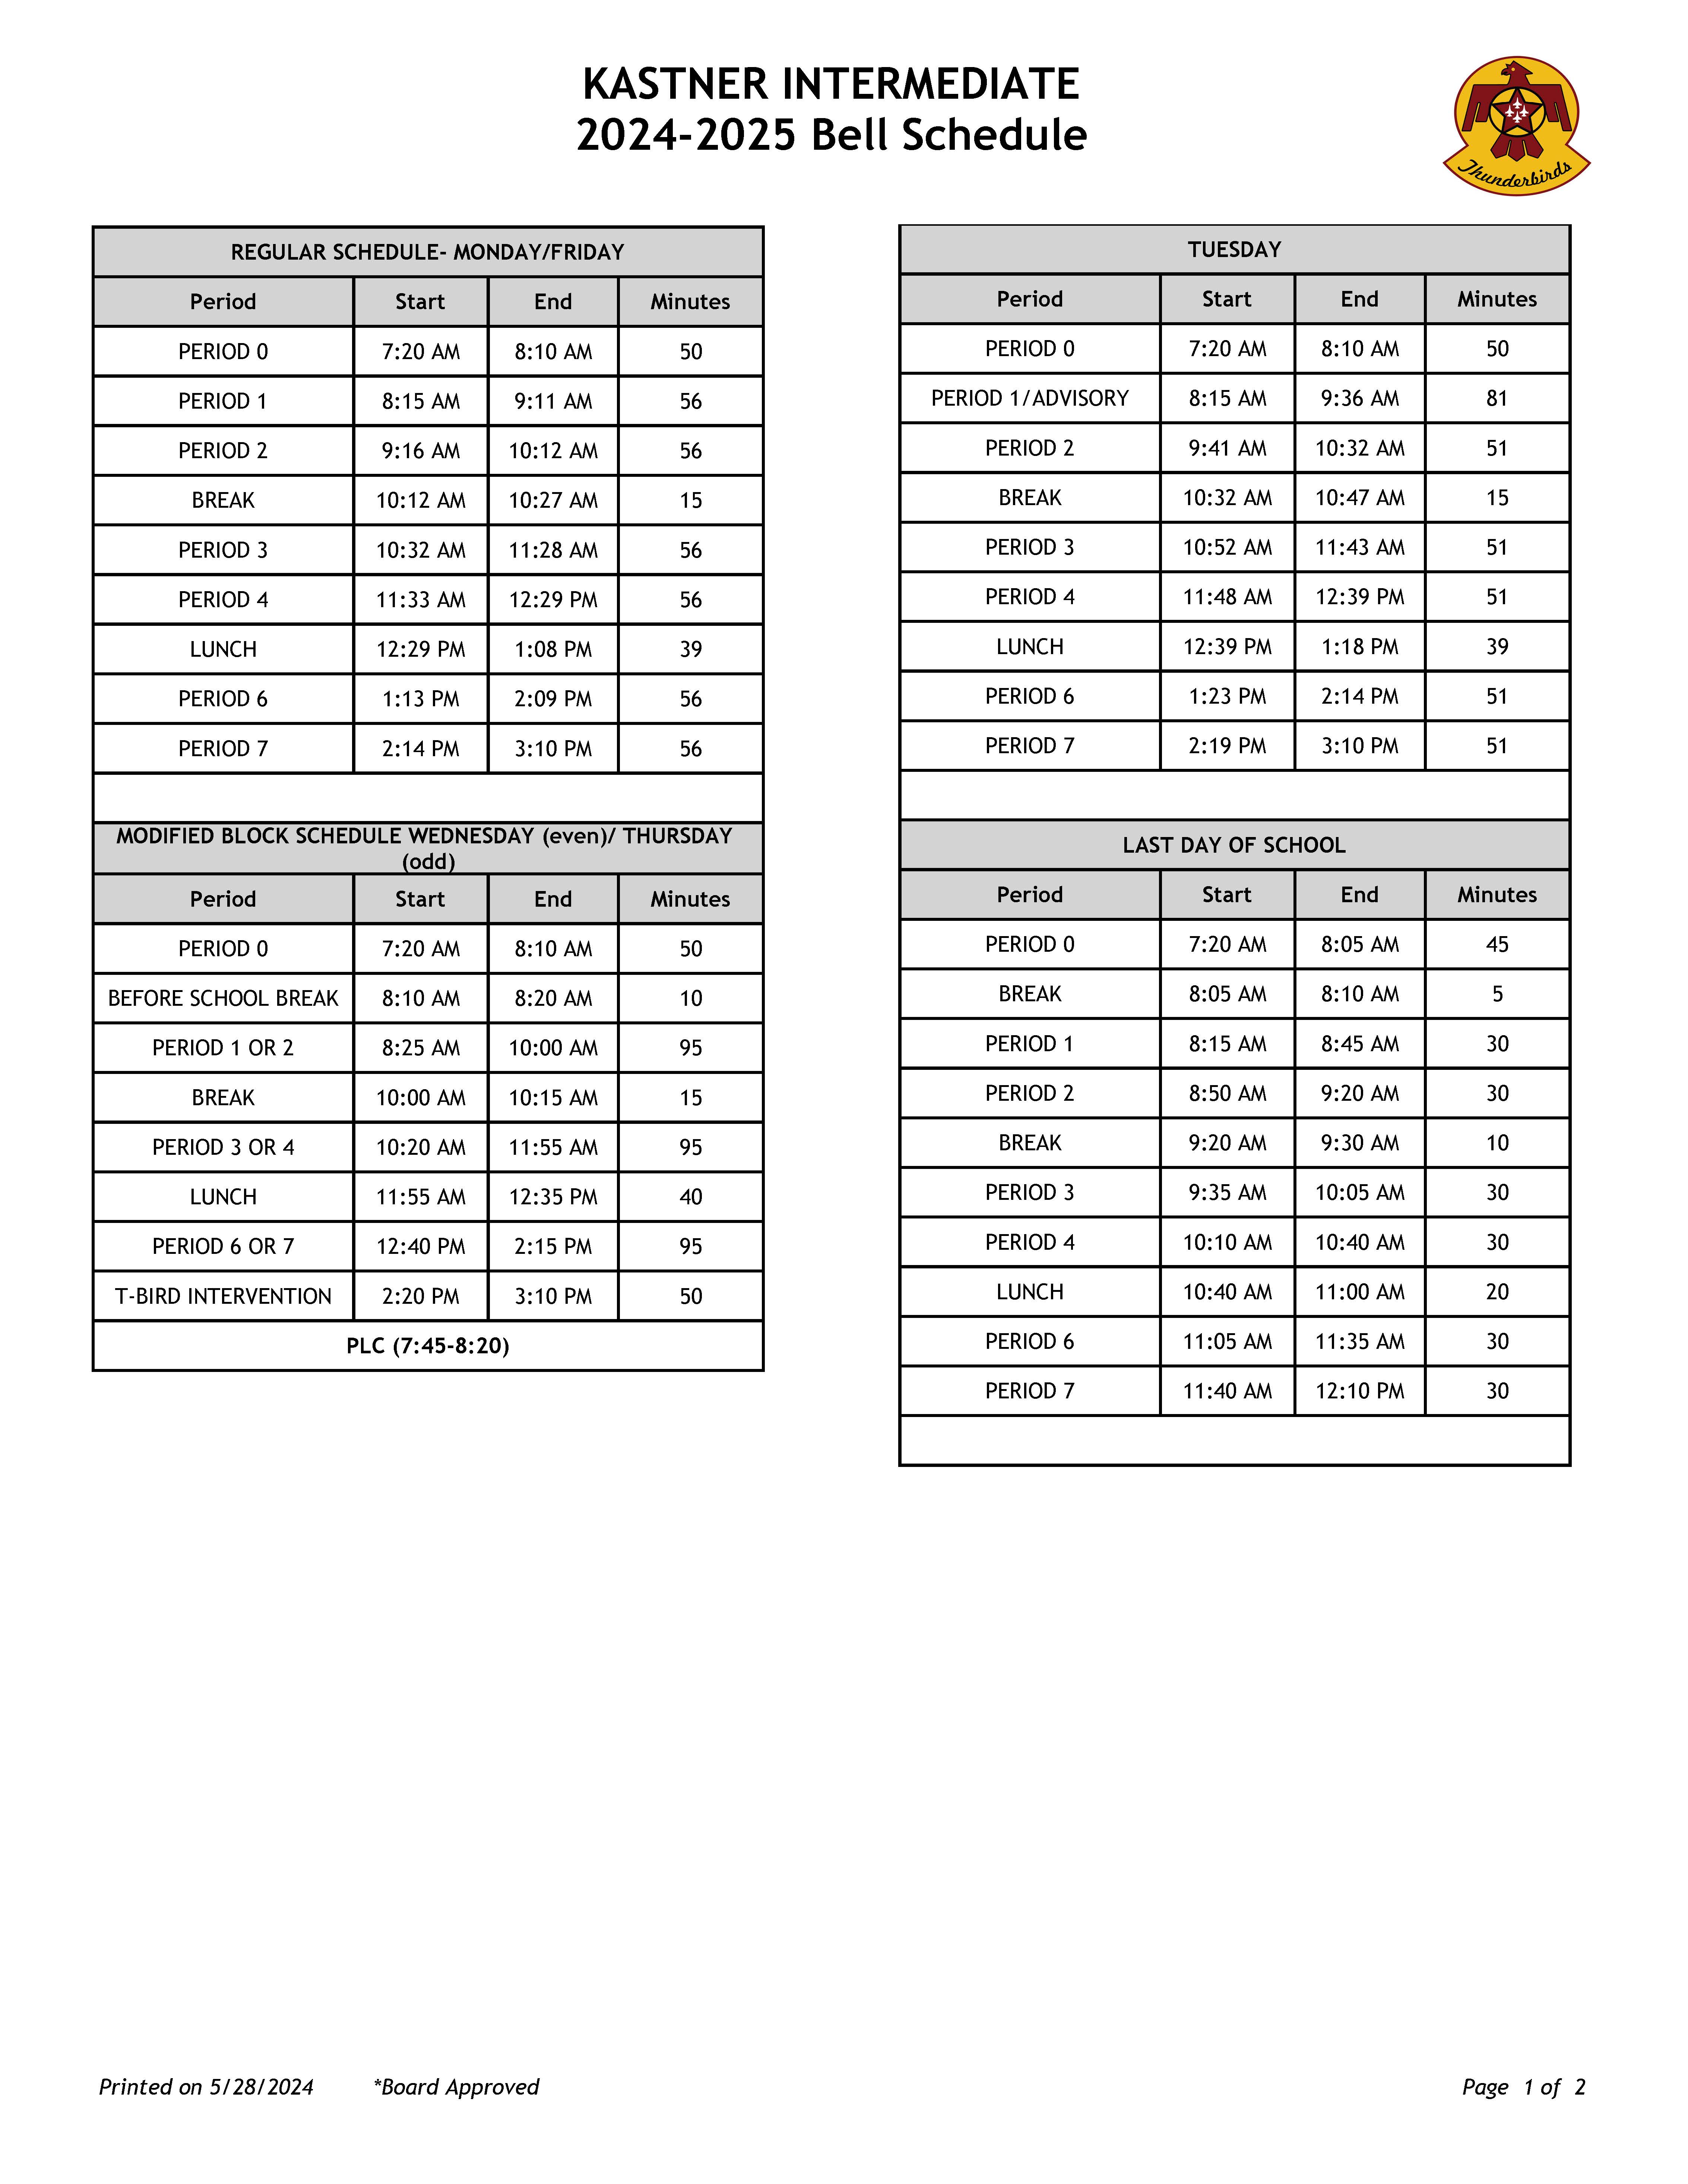 24-25 bell schedule